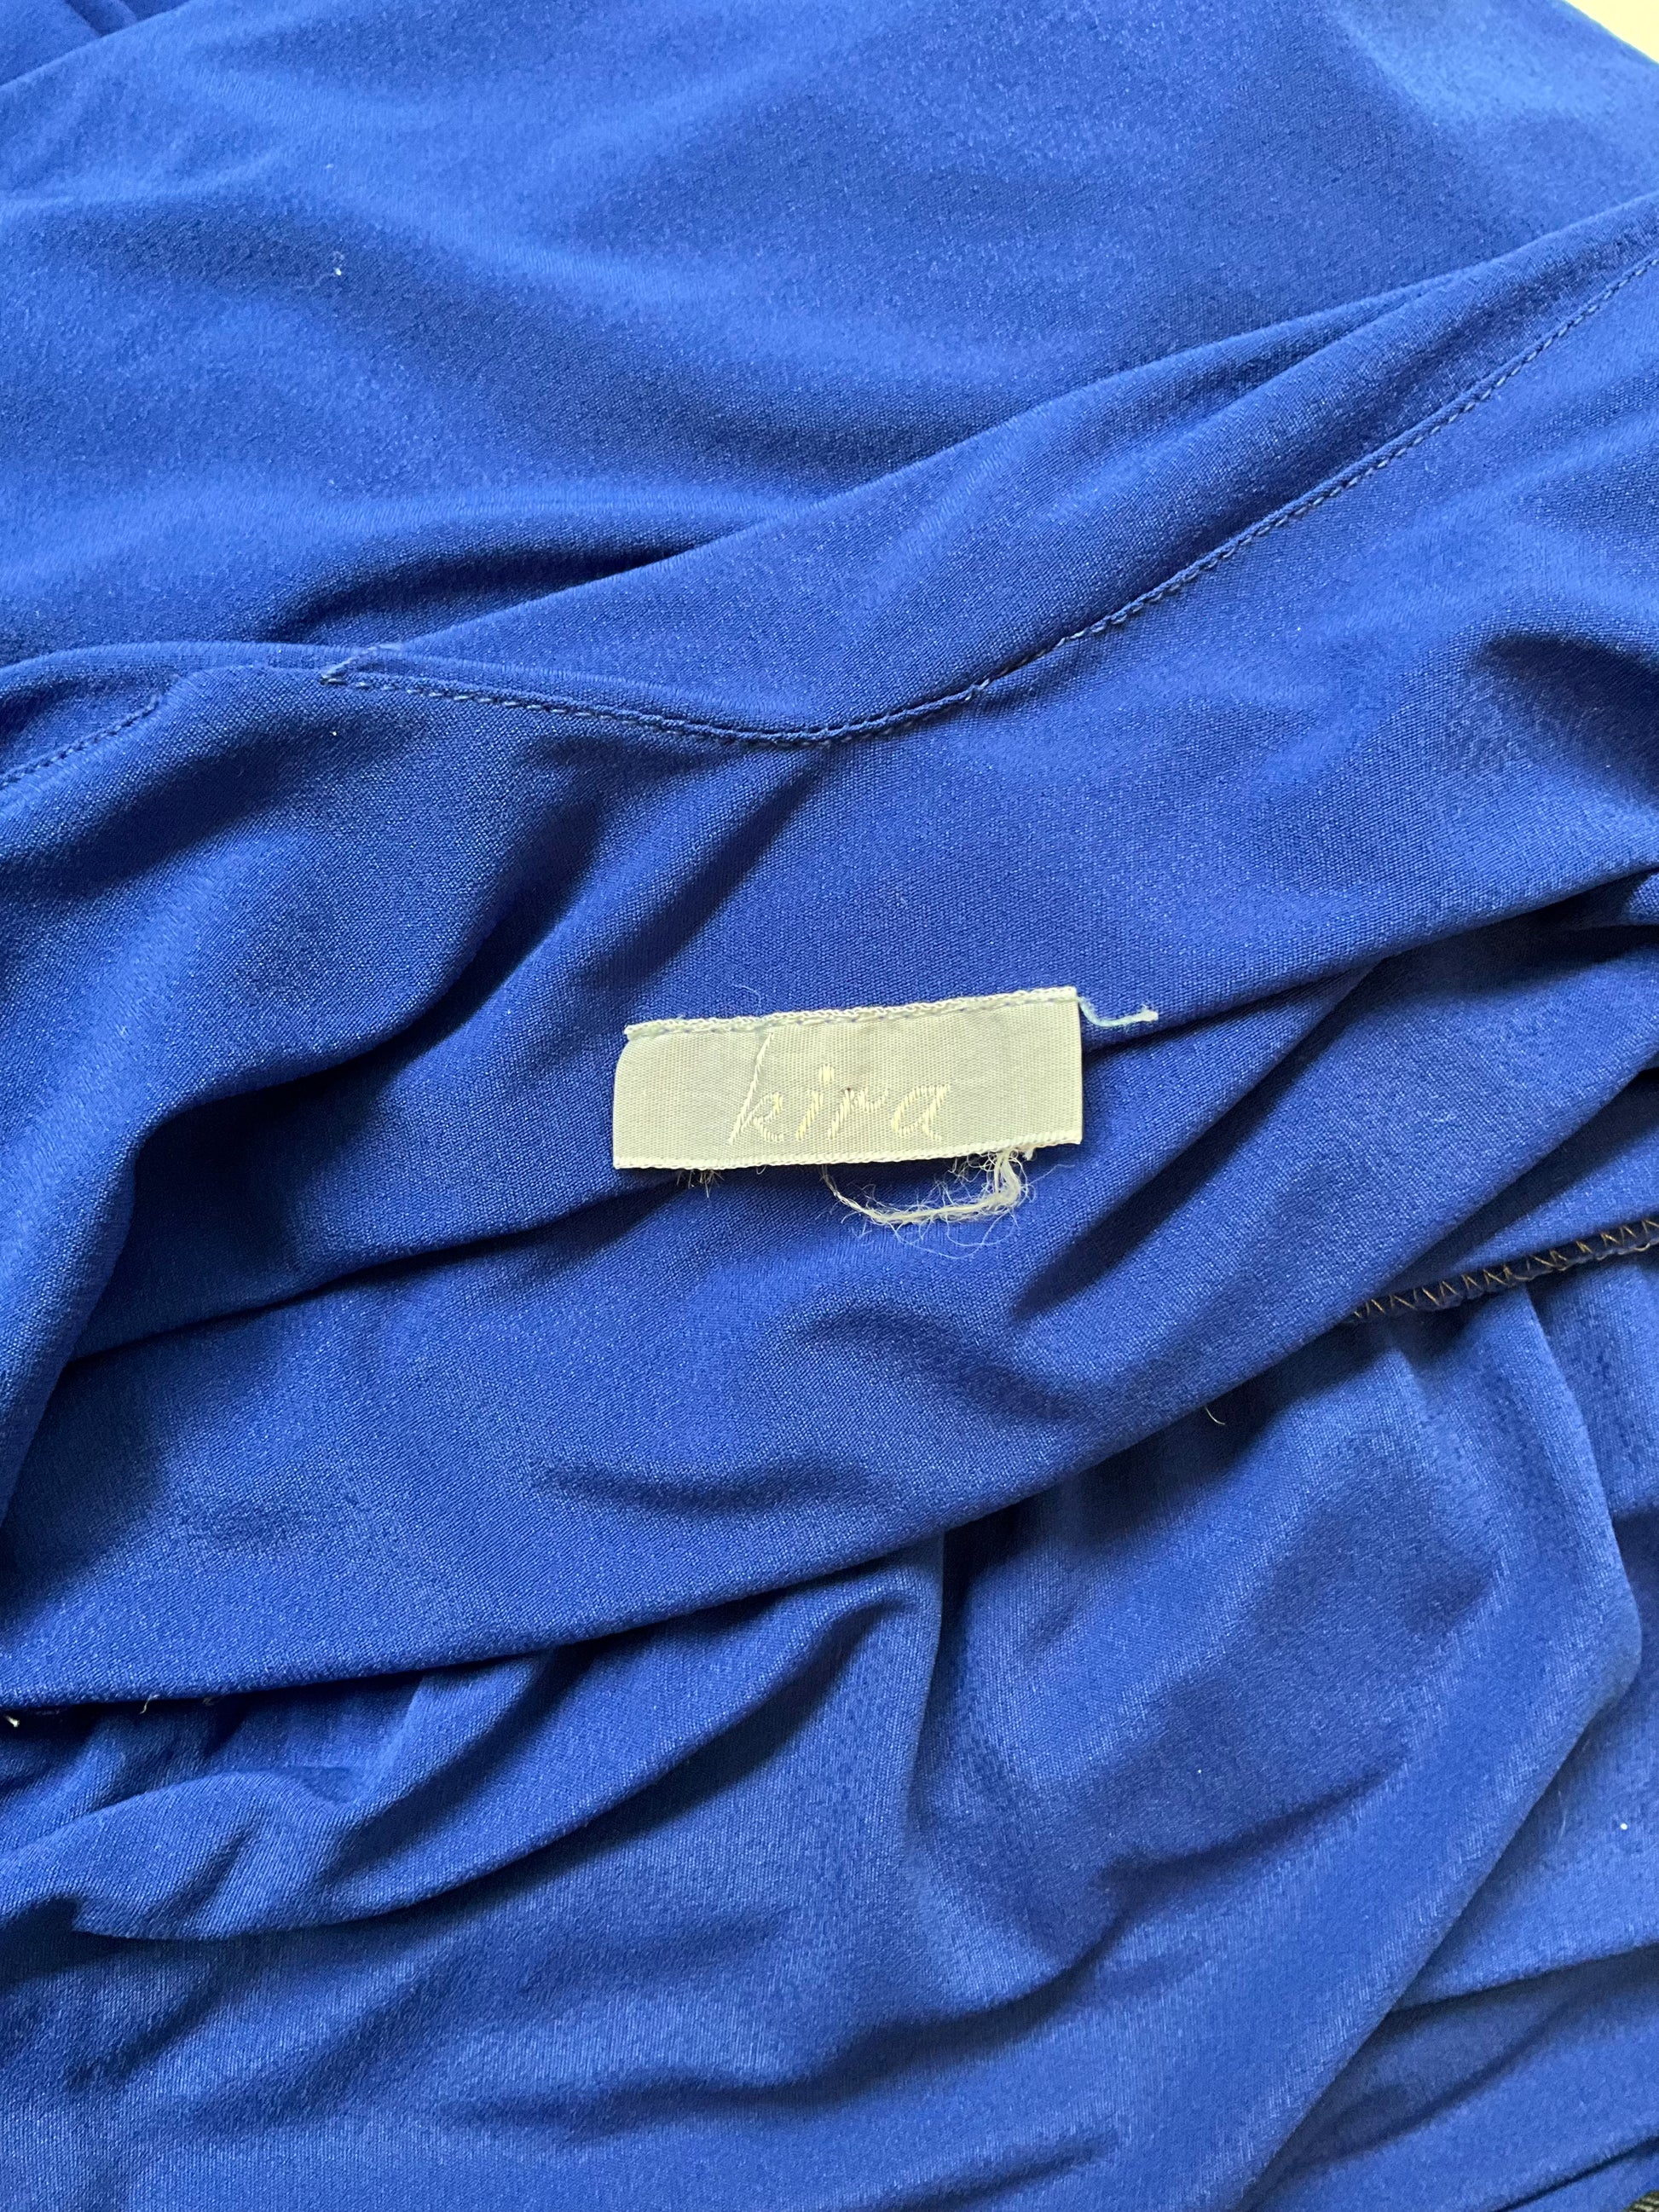 Vintage 1980s Blue Jersey Dress, Medium 